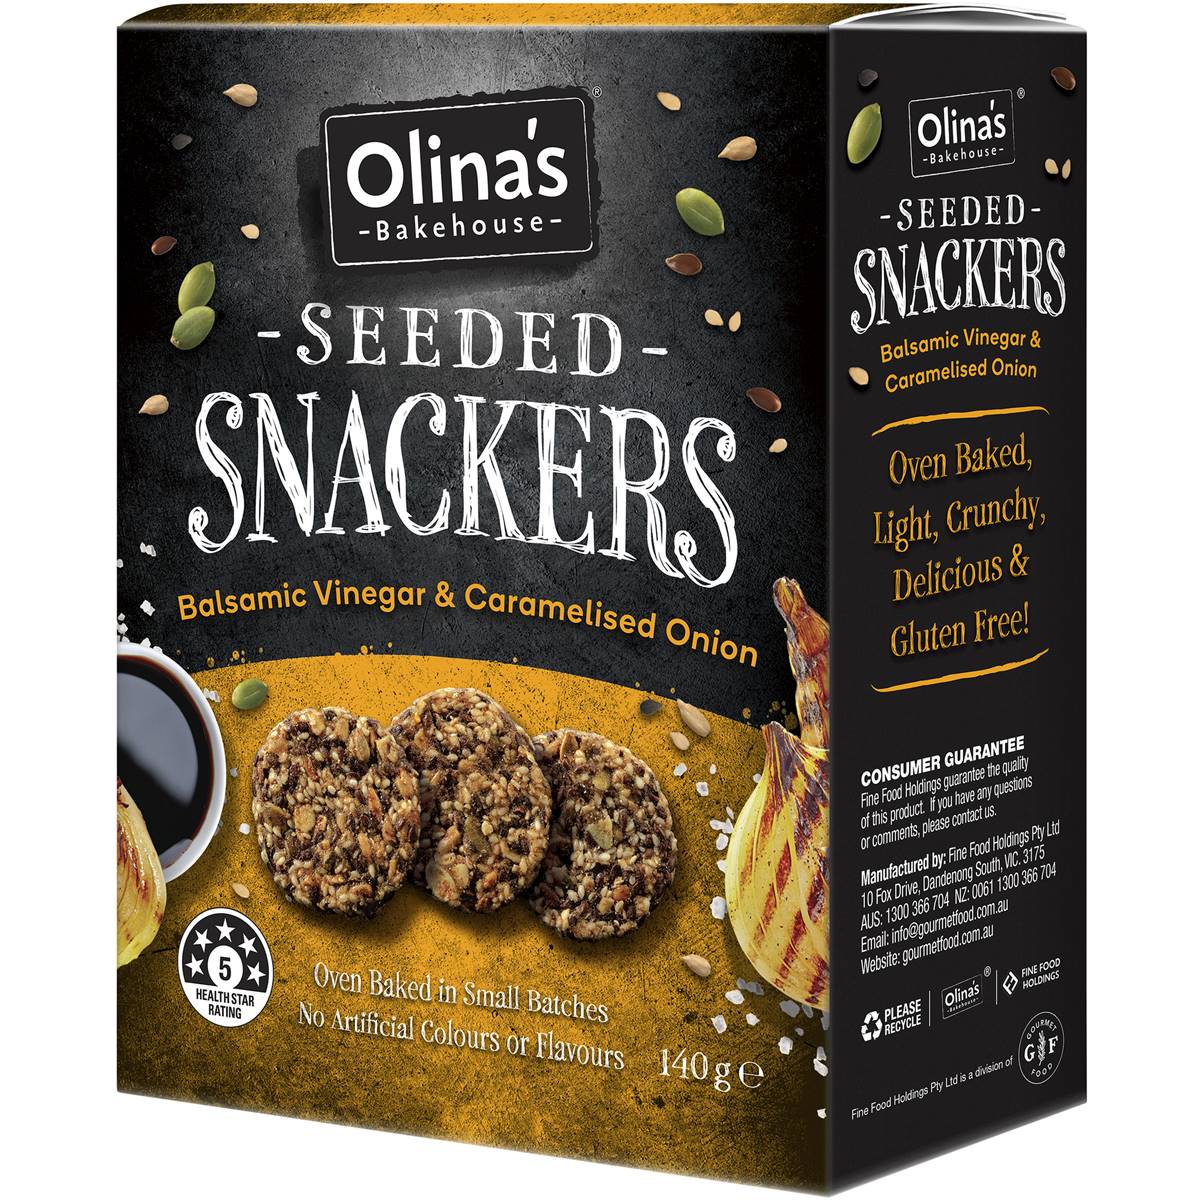 Olina's Seeded Snackers Balsamic Vinegar & Caramelised Onion 140g